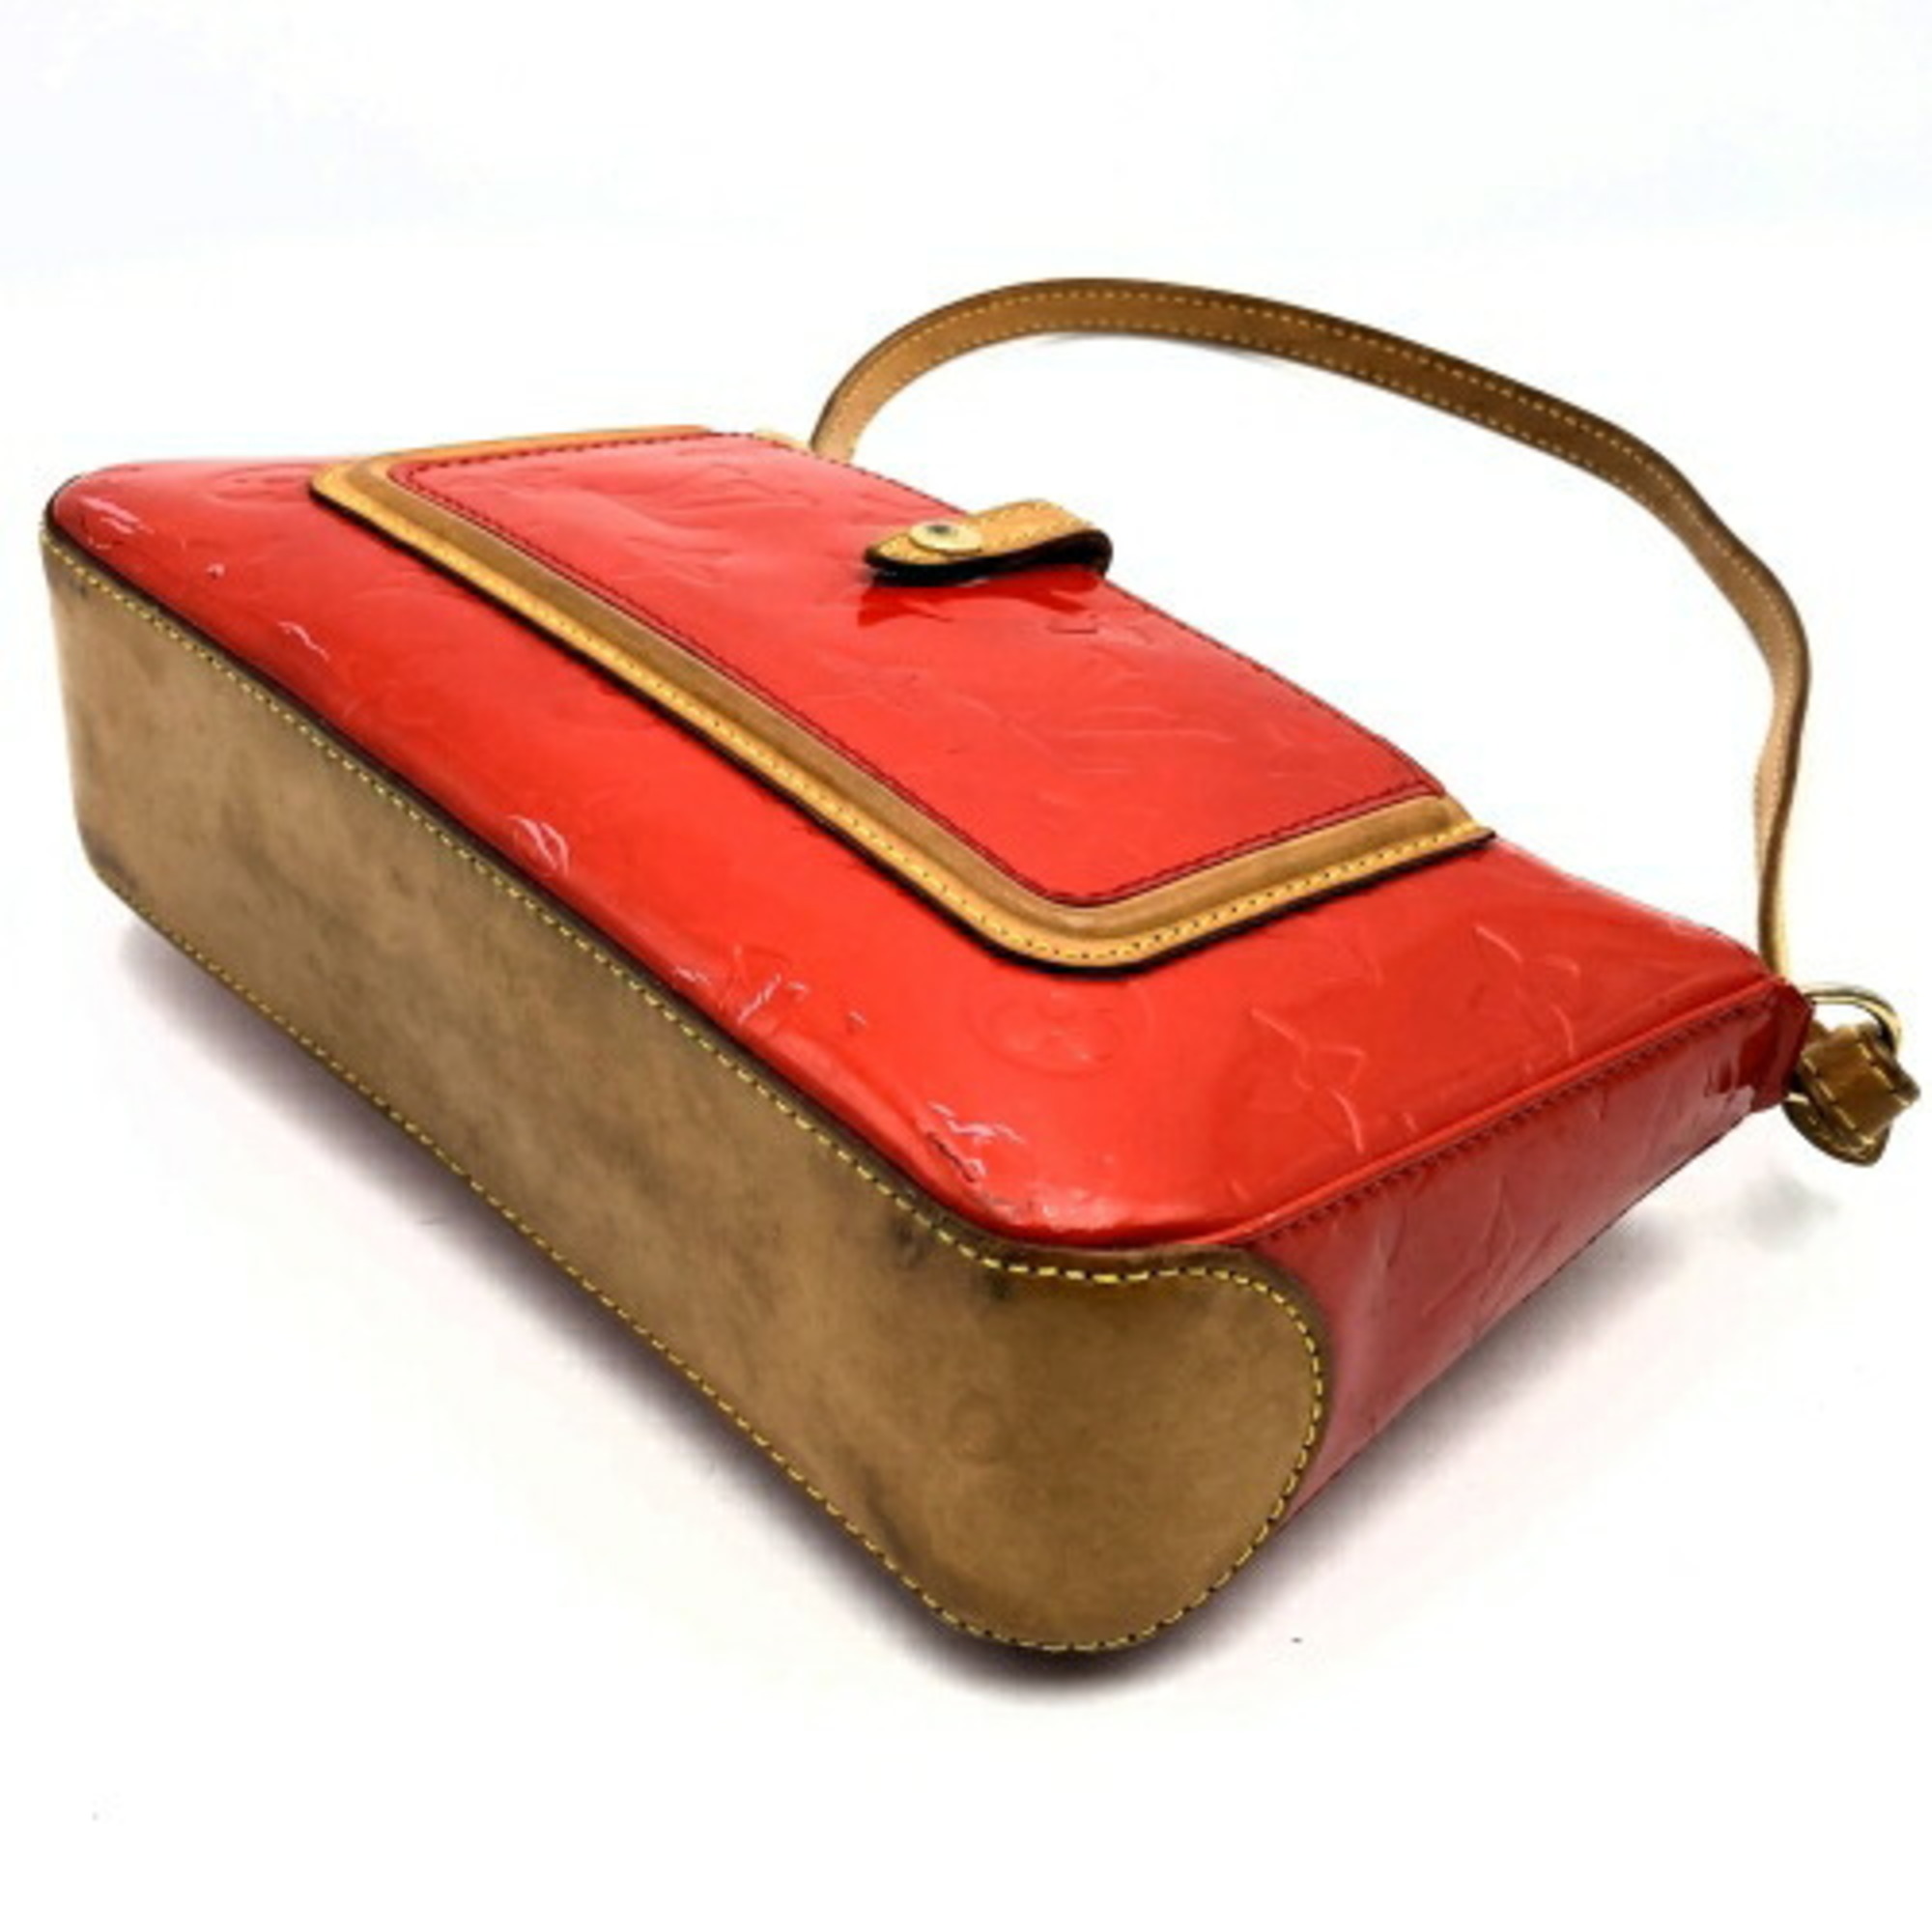 LOUIS VUITTON Mallory Square Vernis Shoulder Bag Handbag Red Women's M91295 USED ITWF52NJOT7R